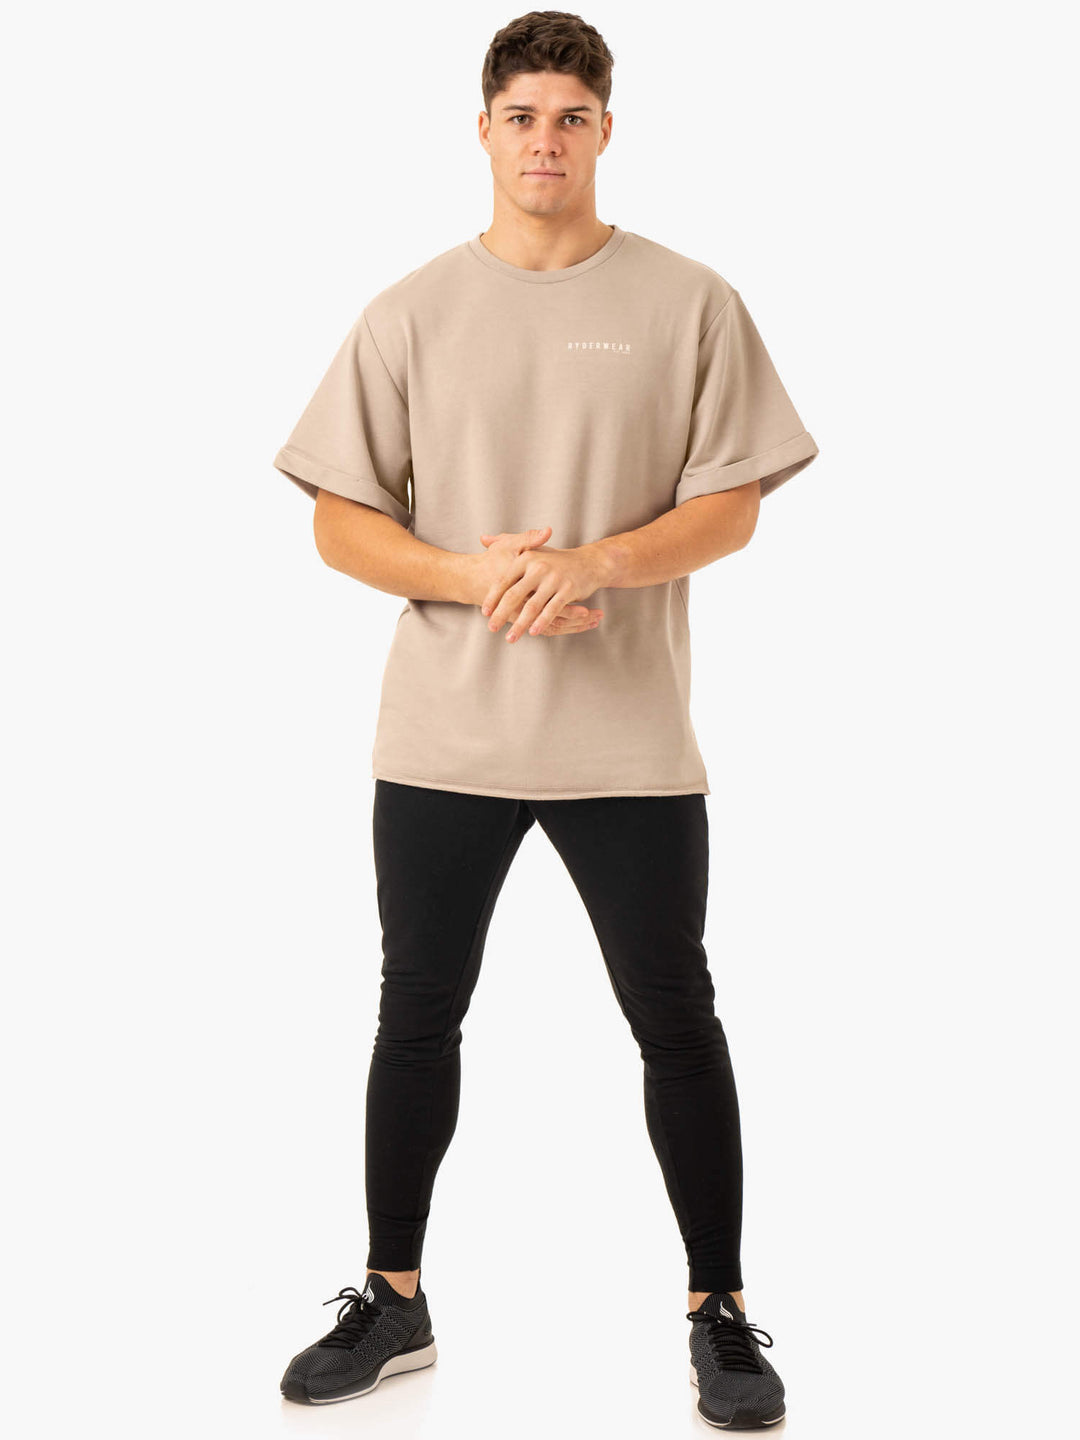 Pursuit Oversized Fleece T-Shirt - Sand Clothing Ryderwear 